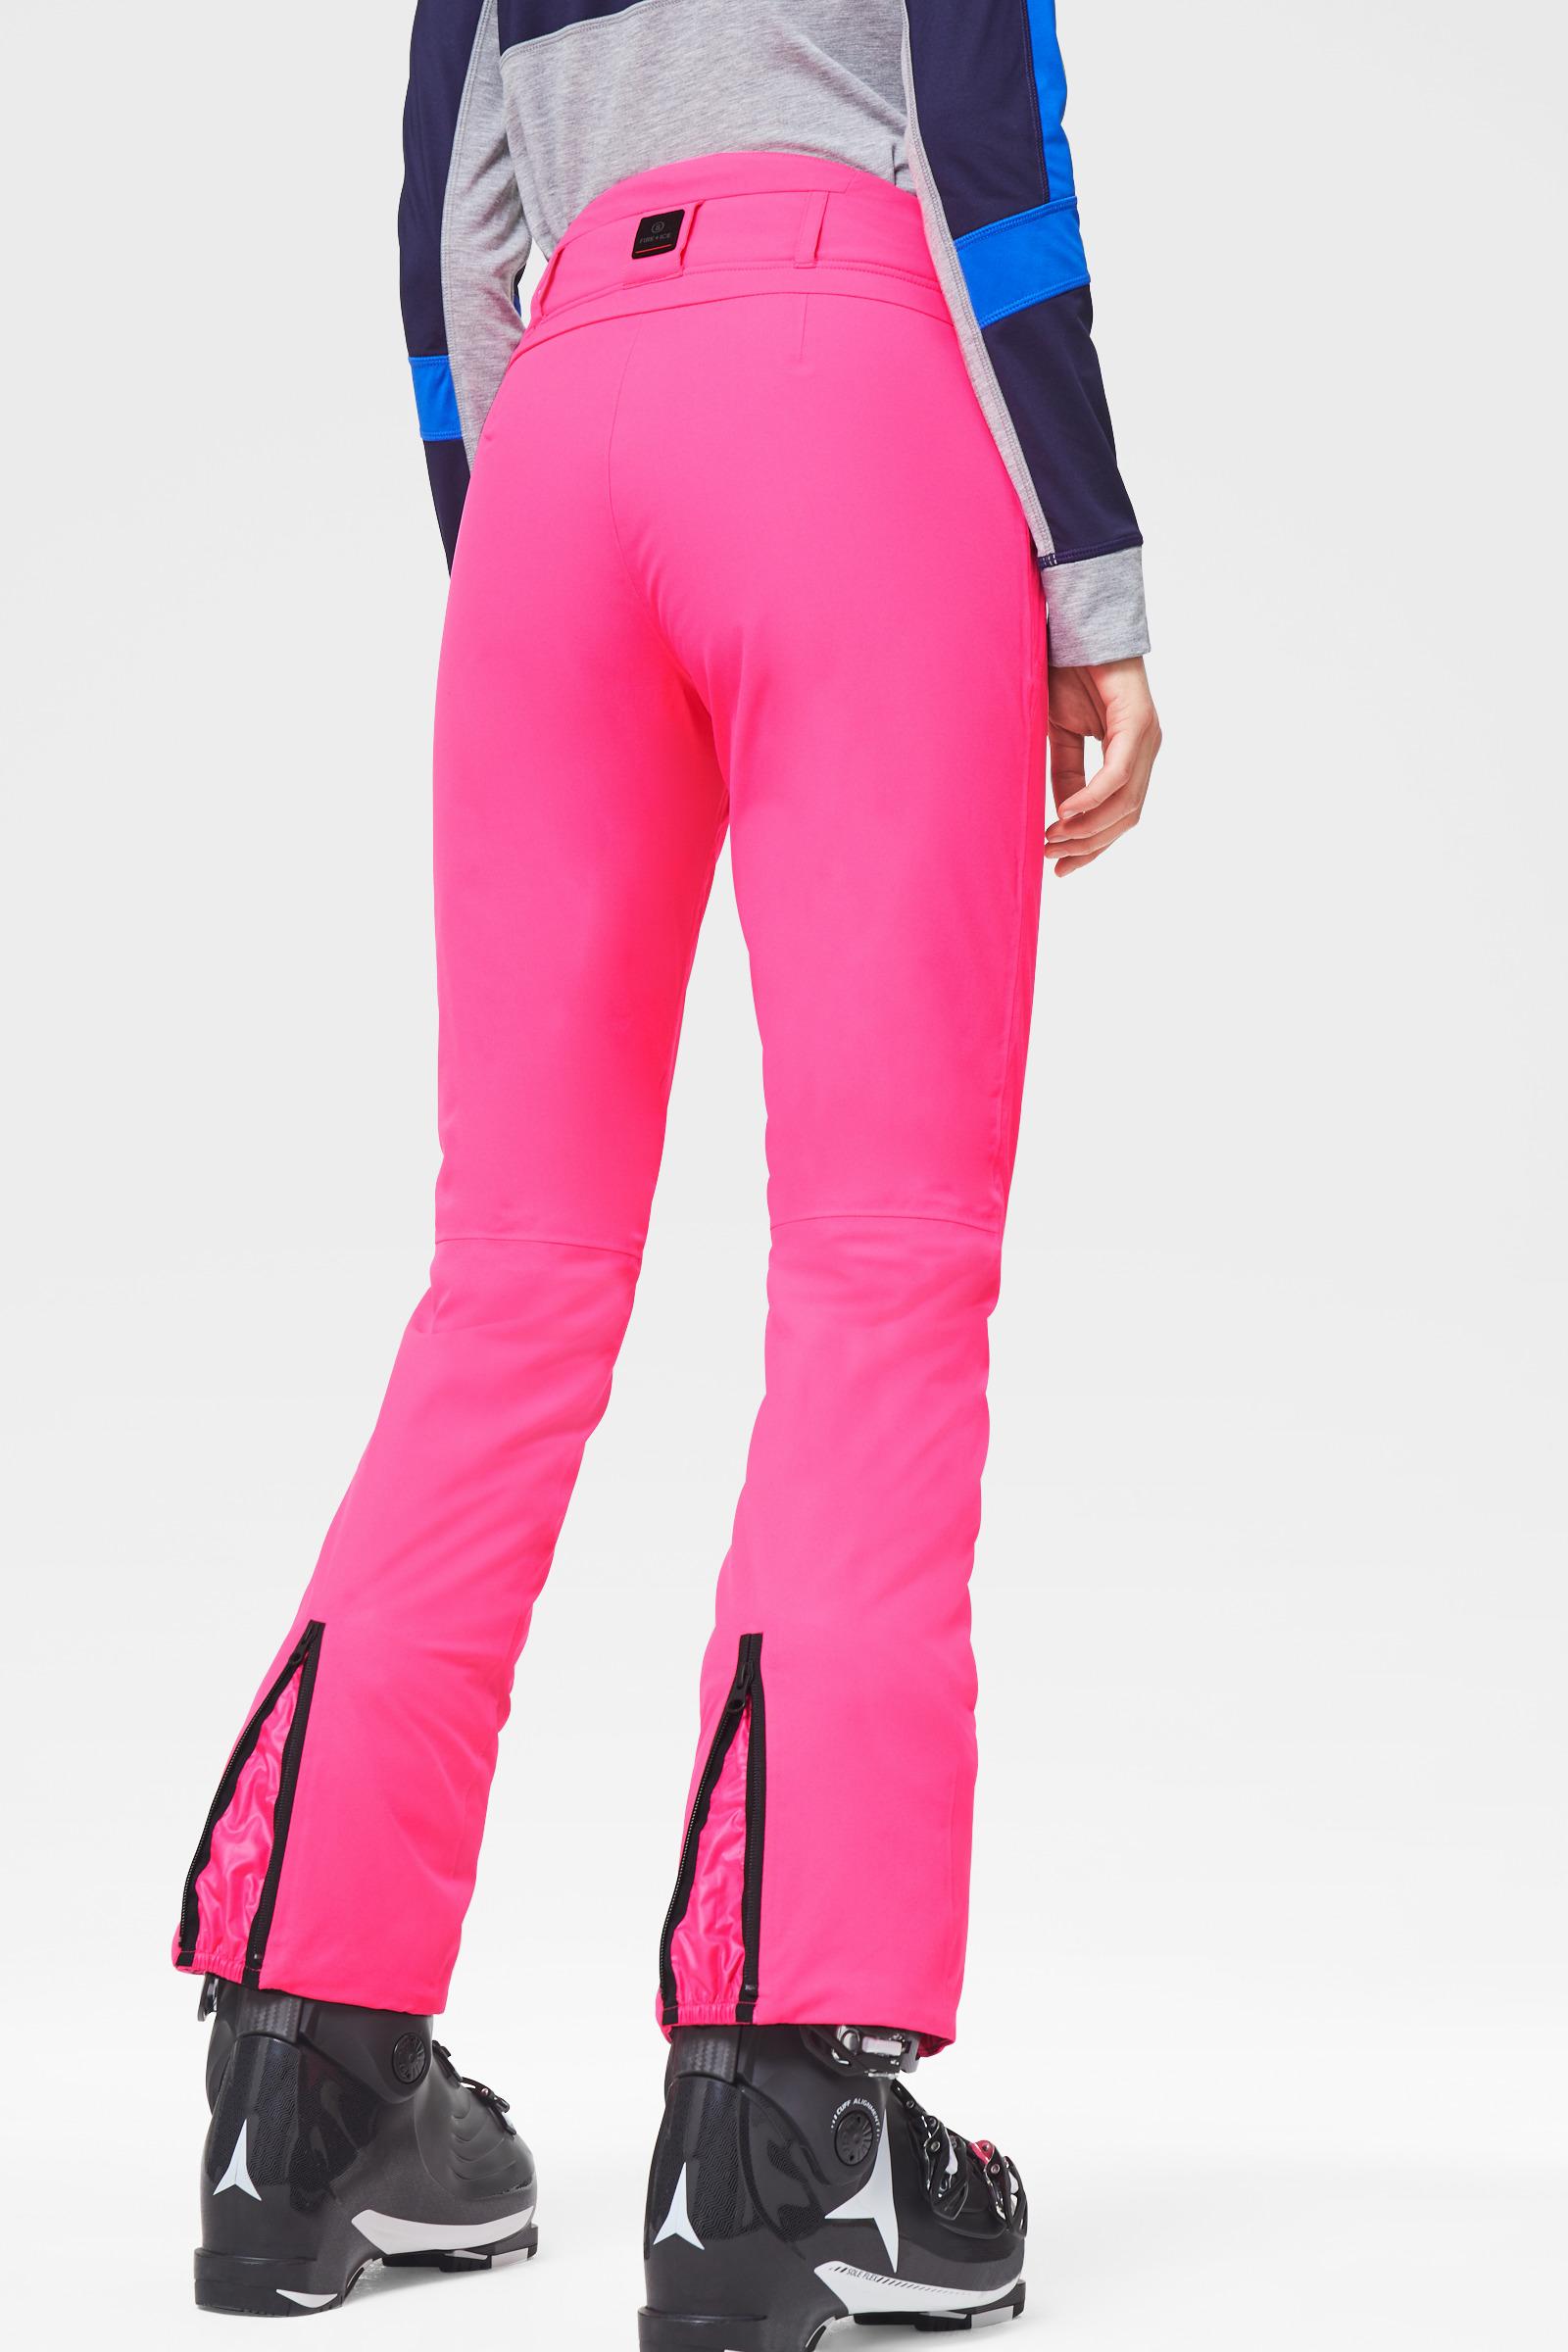 Bogner Synthetic Neda Ski Pants in Pink - Lyst